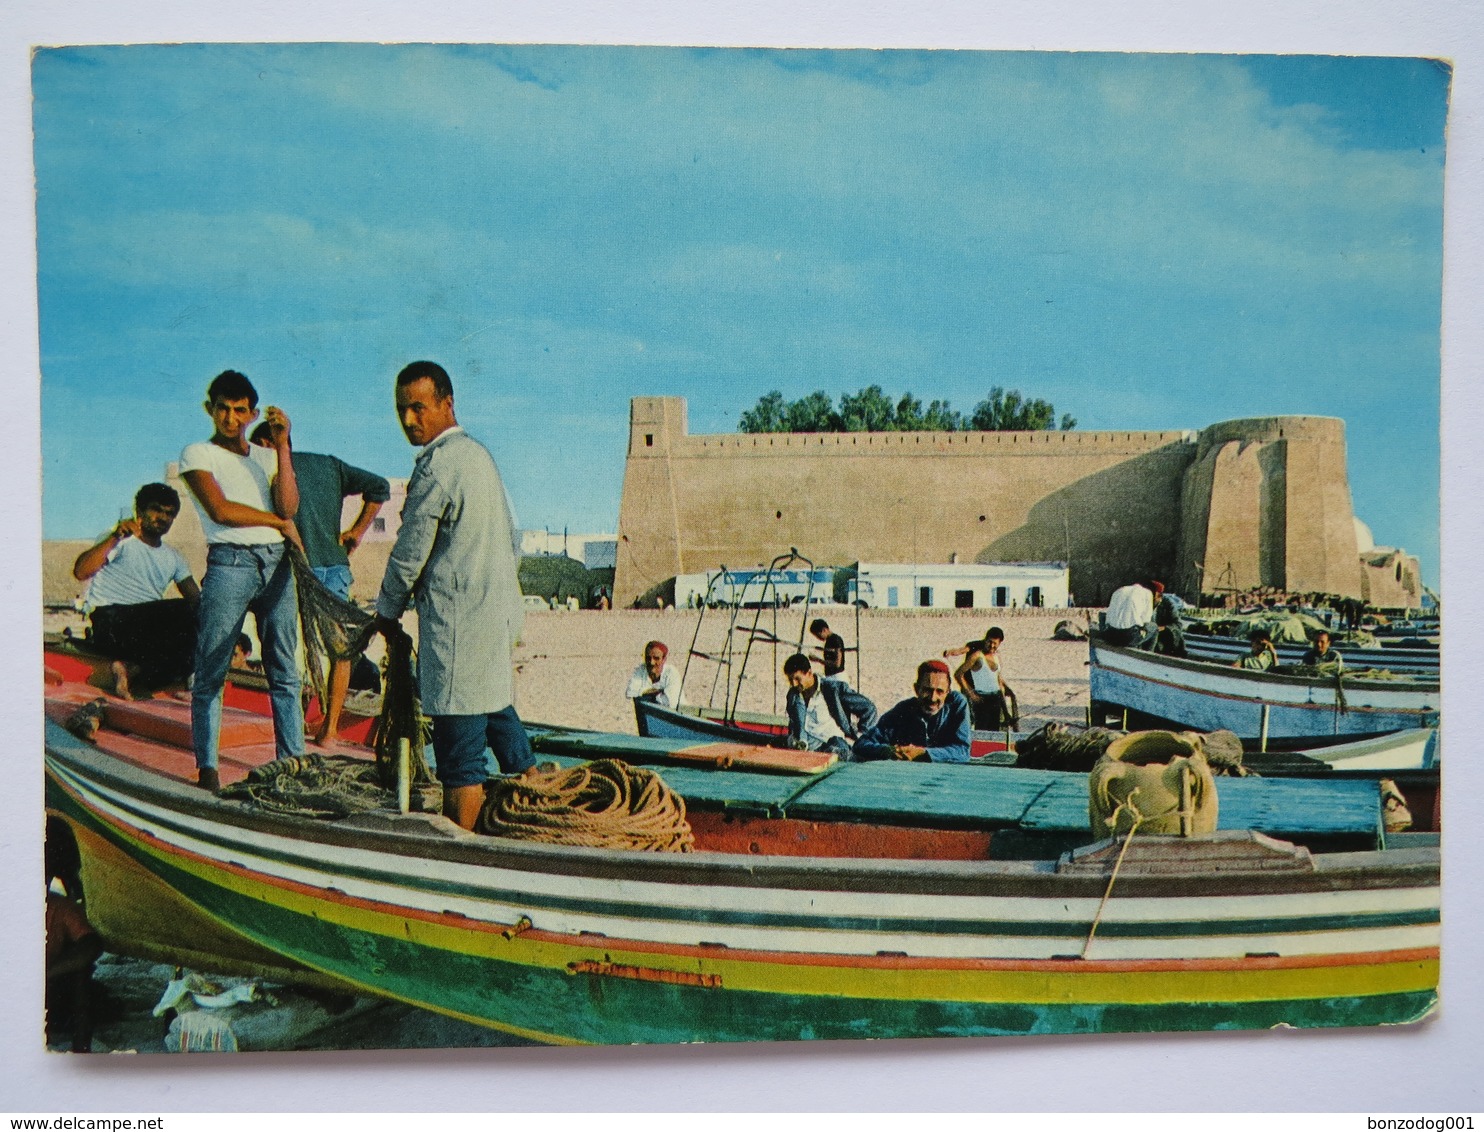 LA KASBAH, FORT, HAMMAMET. FISHERMEN, BOATS. #1. POSTED 1972 - Tunisia